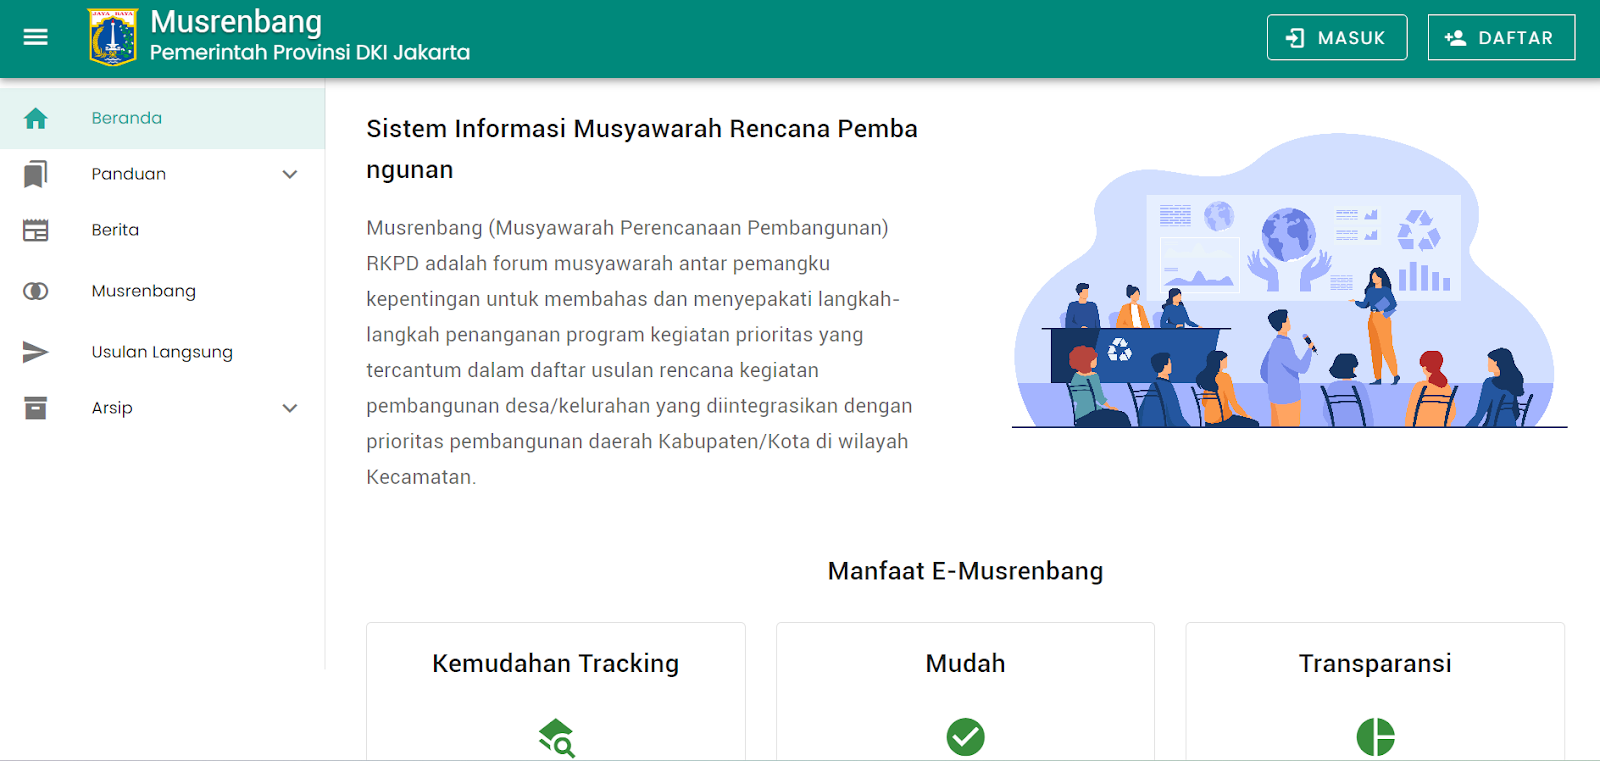 The website of Musrenbang